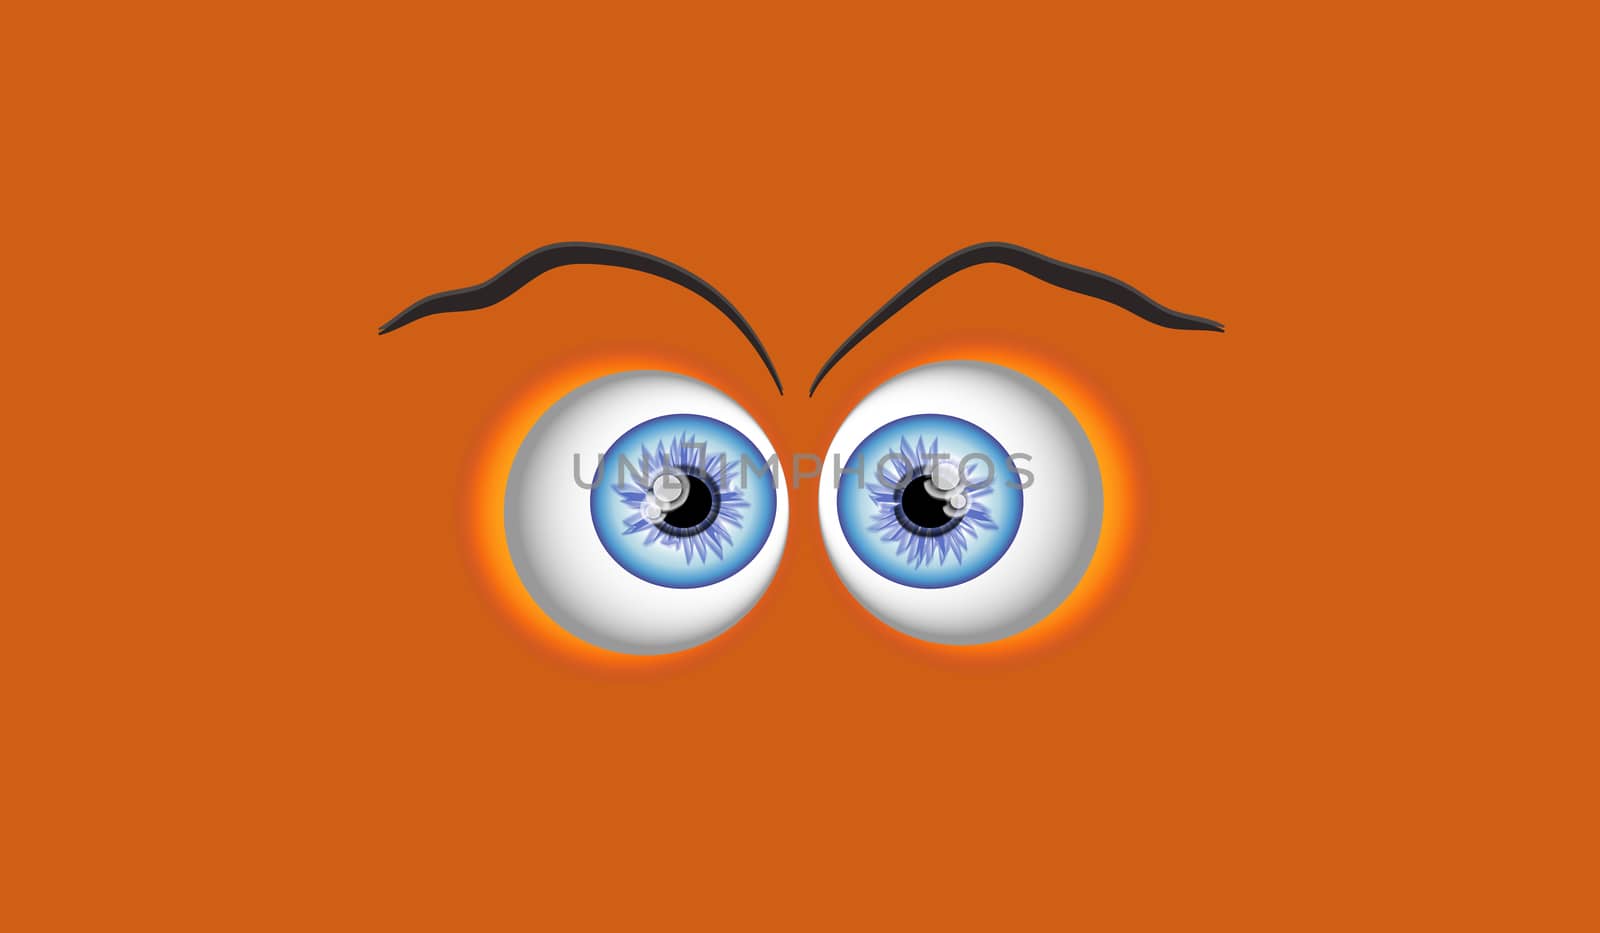 Funny eyes with eyebrows on orange backgound